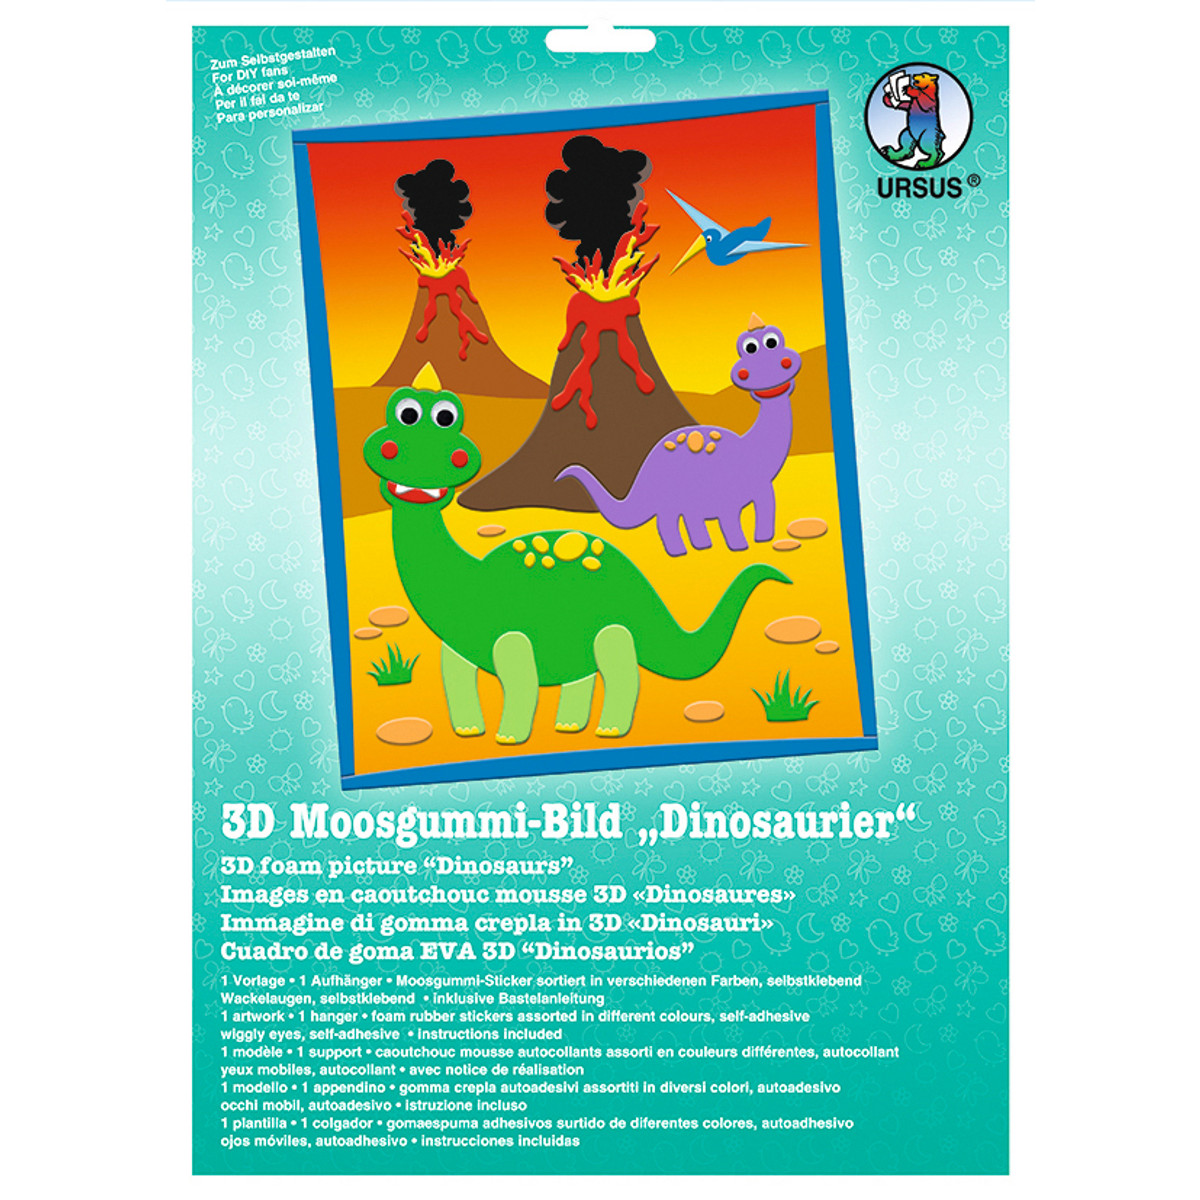 3D-Moosgummi-Bild "Dinosaurier"